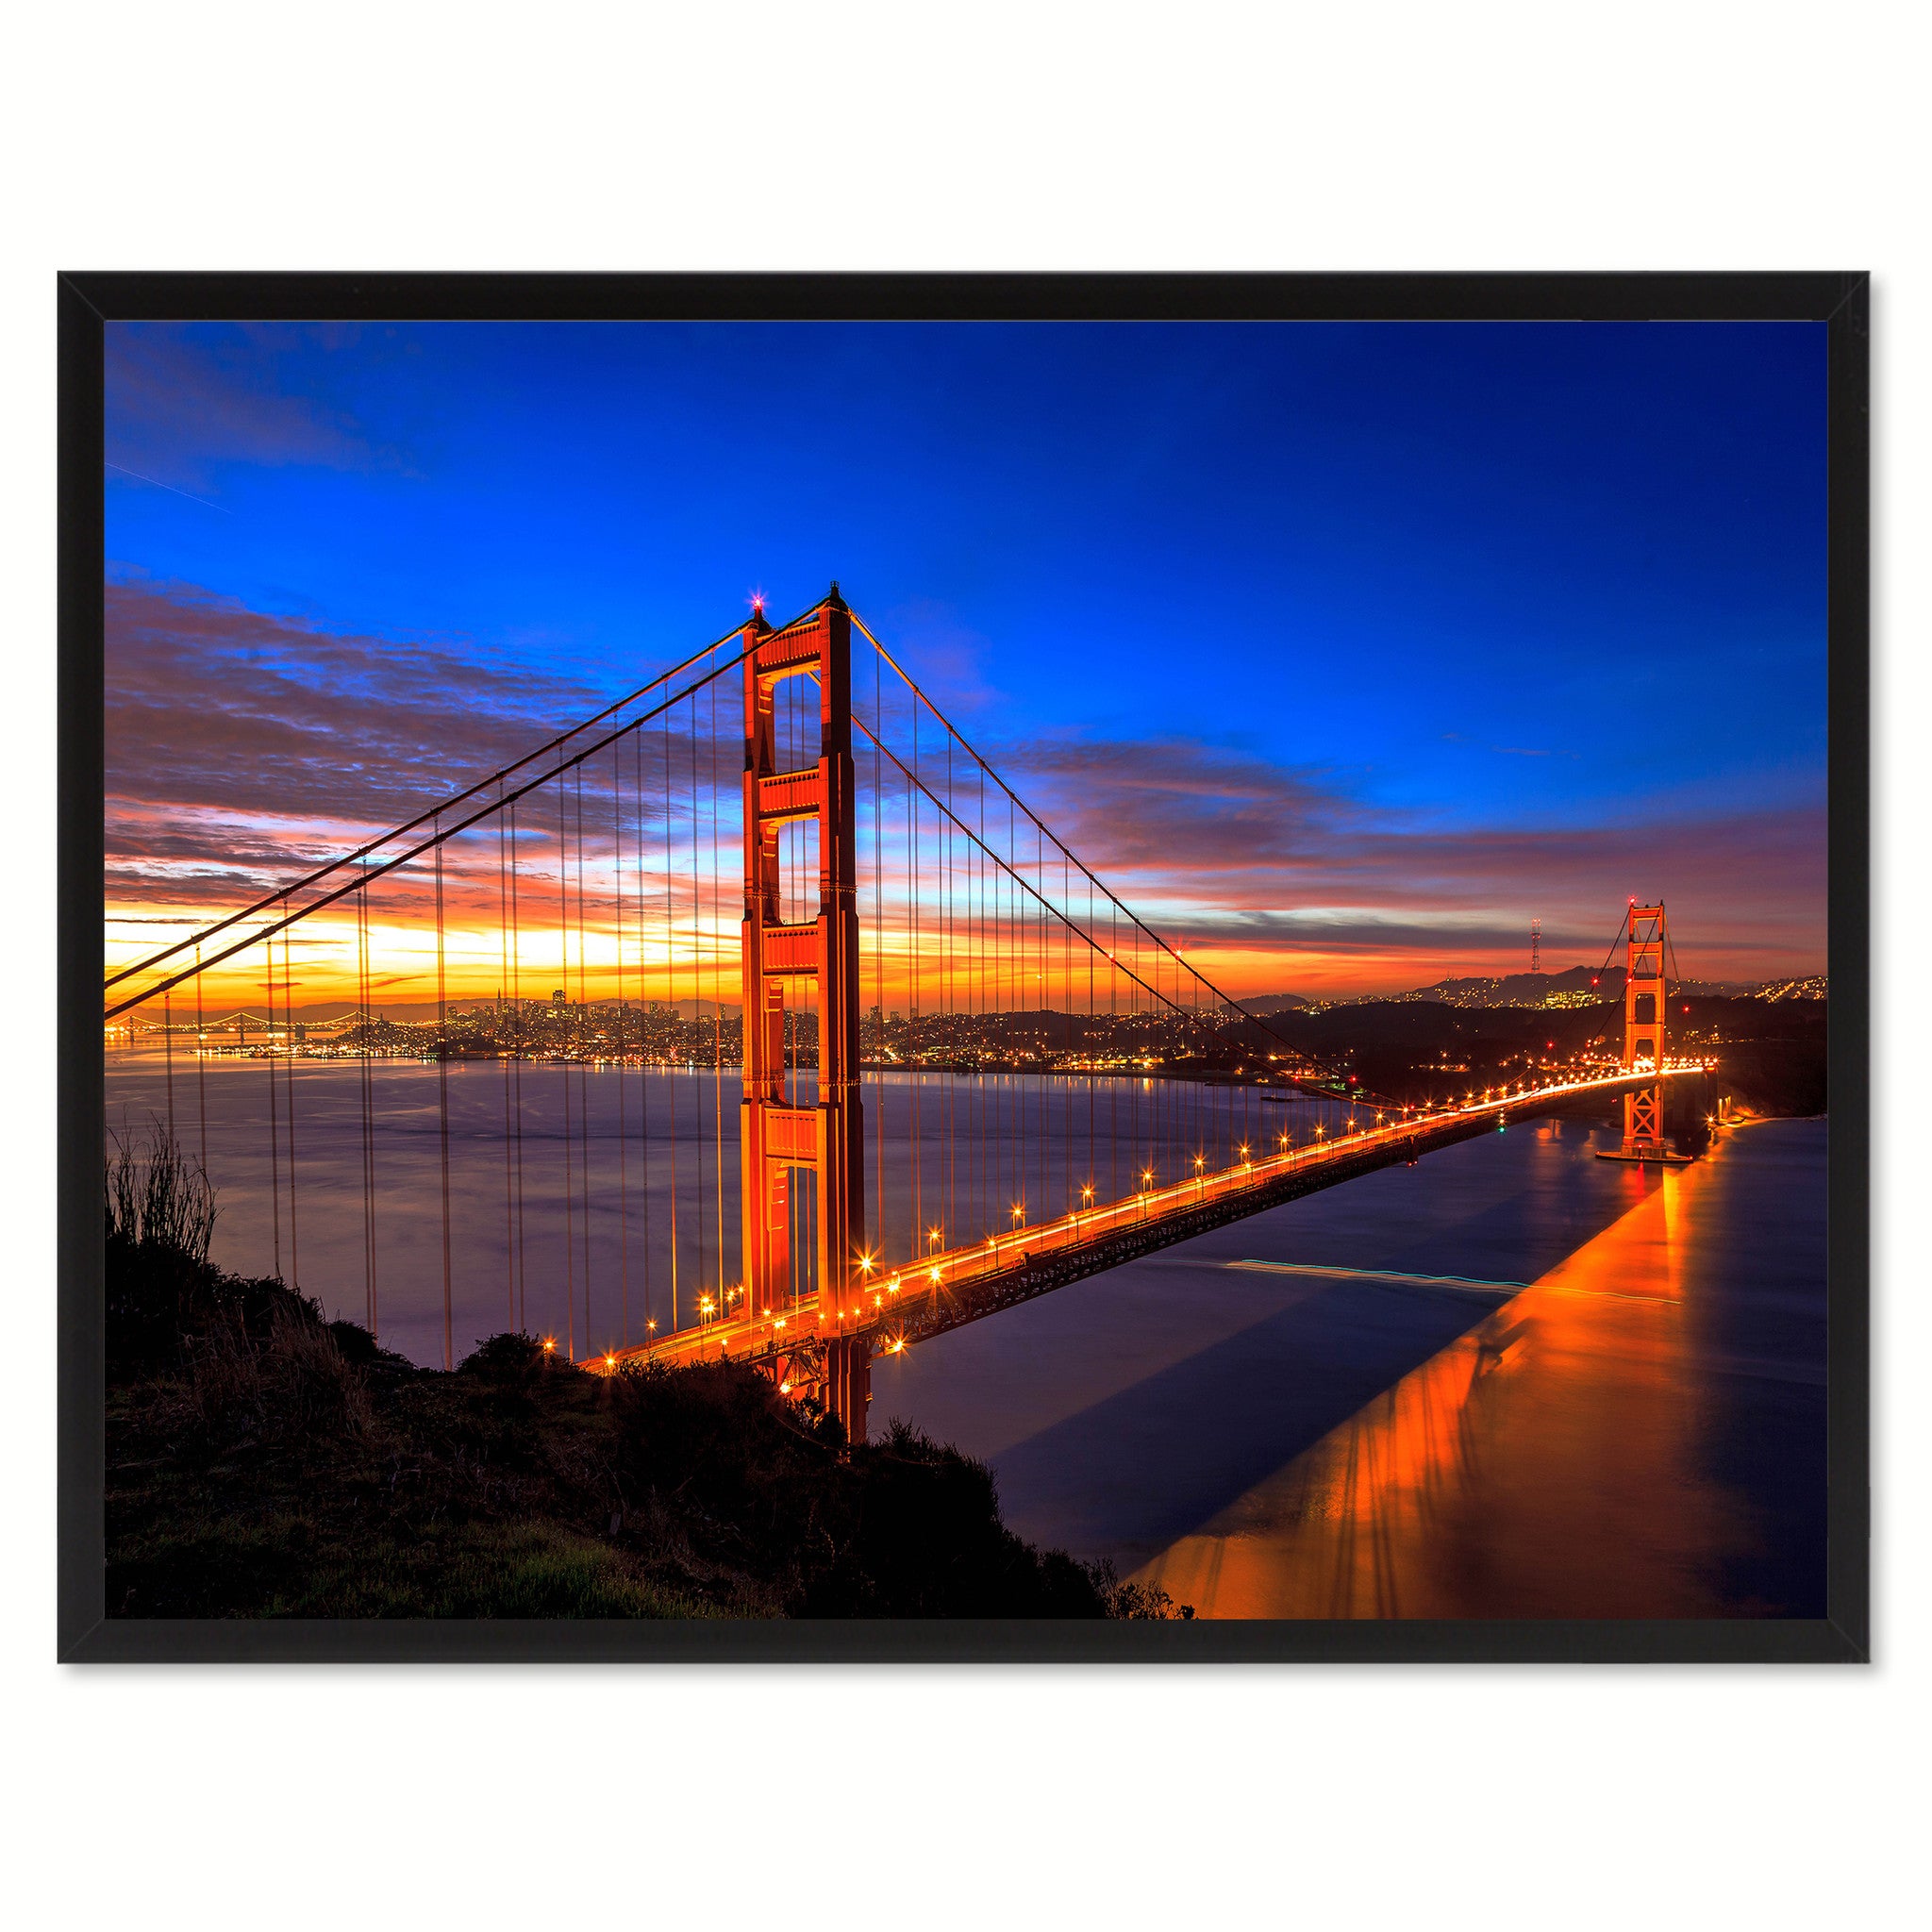 Golden Gate Bridge California Landscape Photo Canvas Print Pictures Frames Home Décor Wall Art Gifts